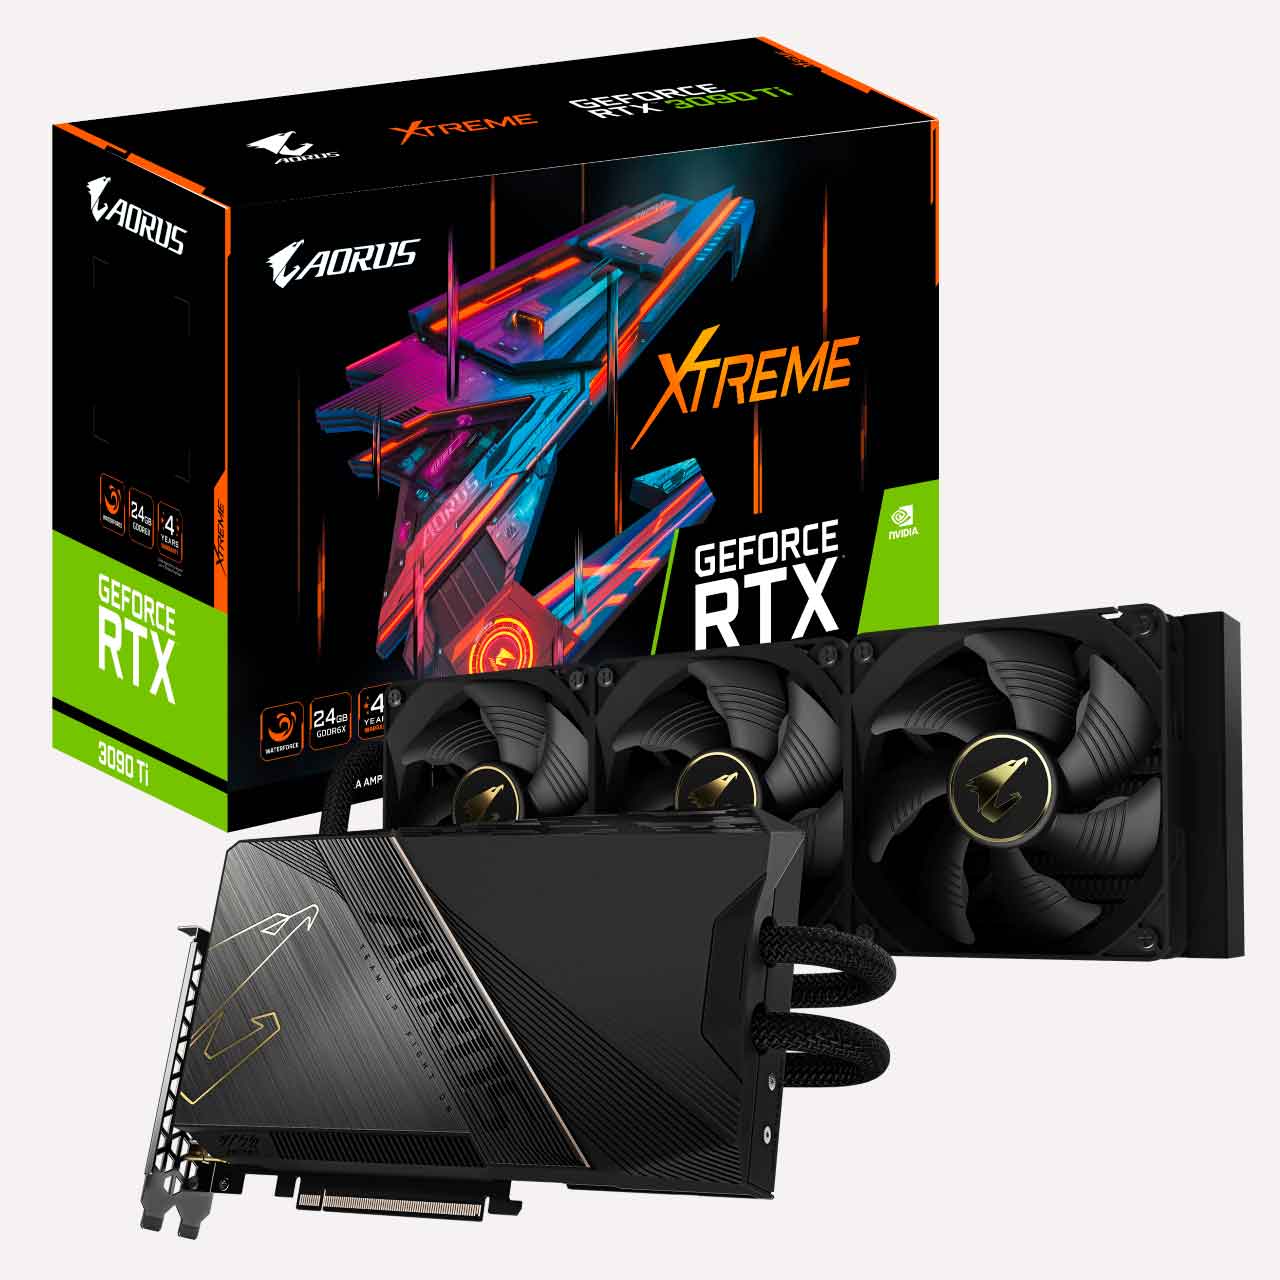 Gigabyte presenta sus GeForce RTX 3090 Ti